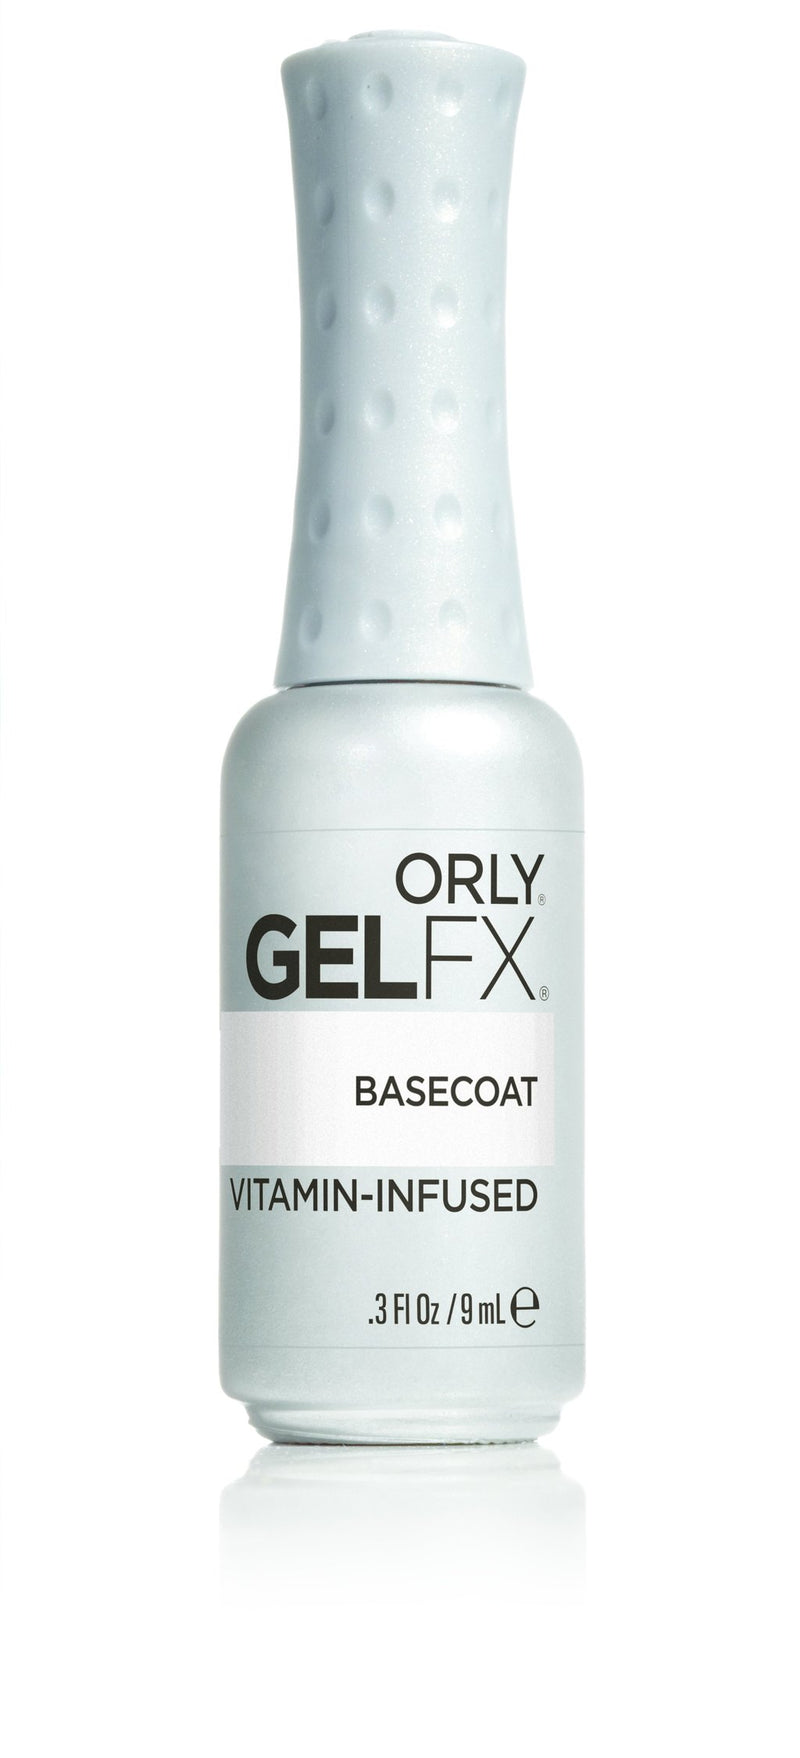 ORLY Gel FX Basecoat